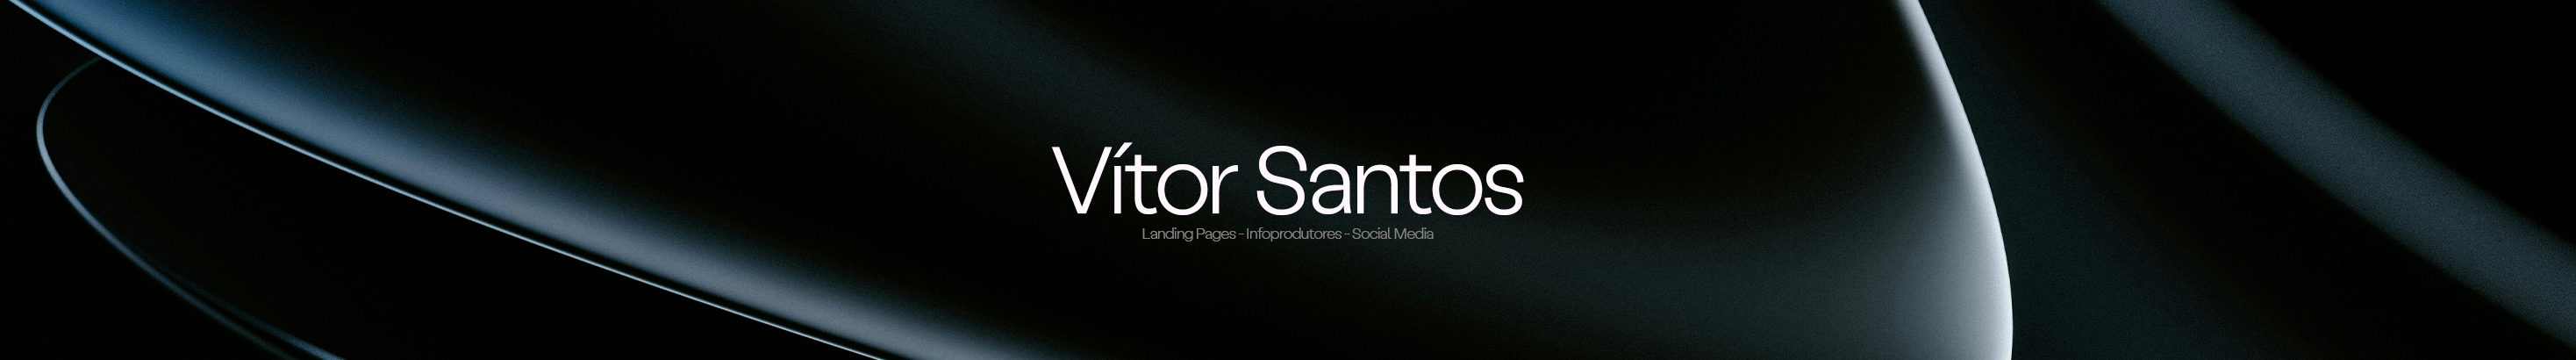 Vítor Santos 的个人资料横幅